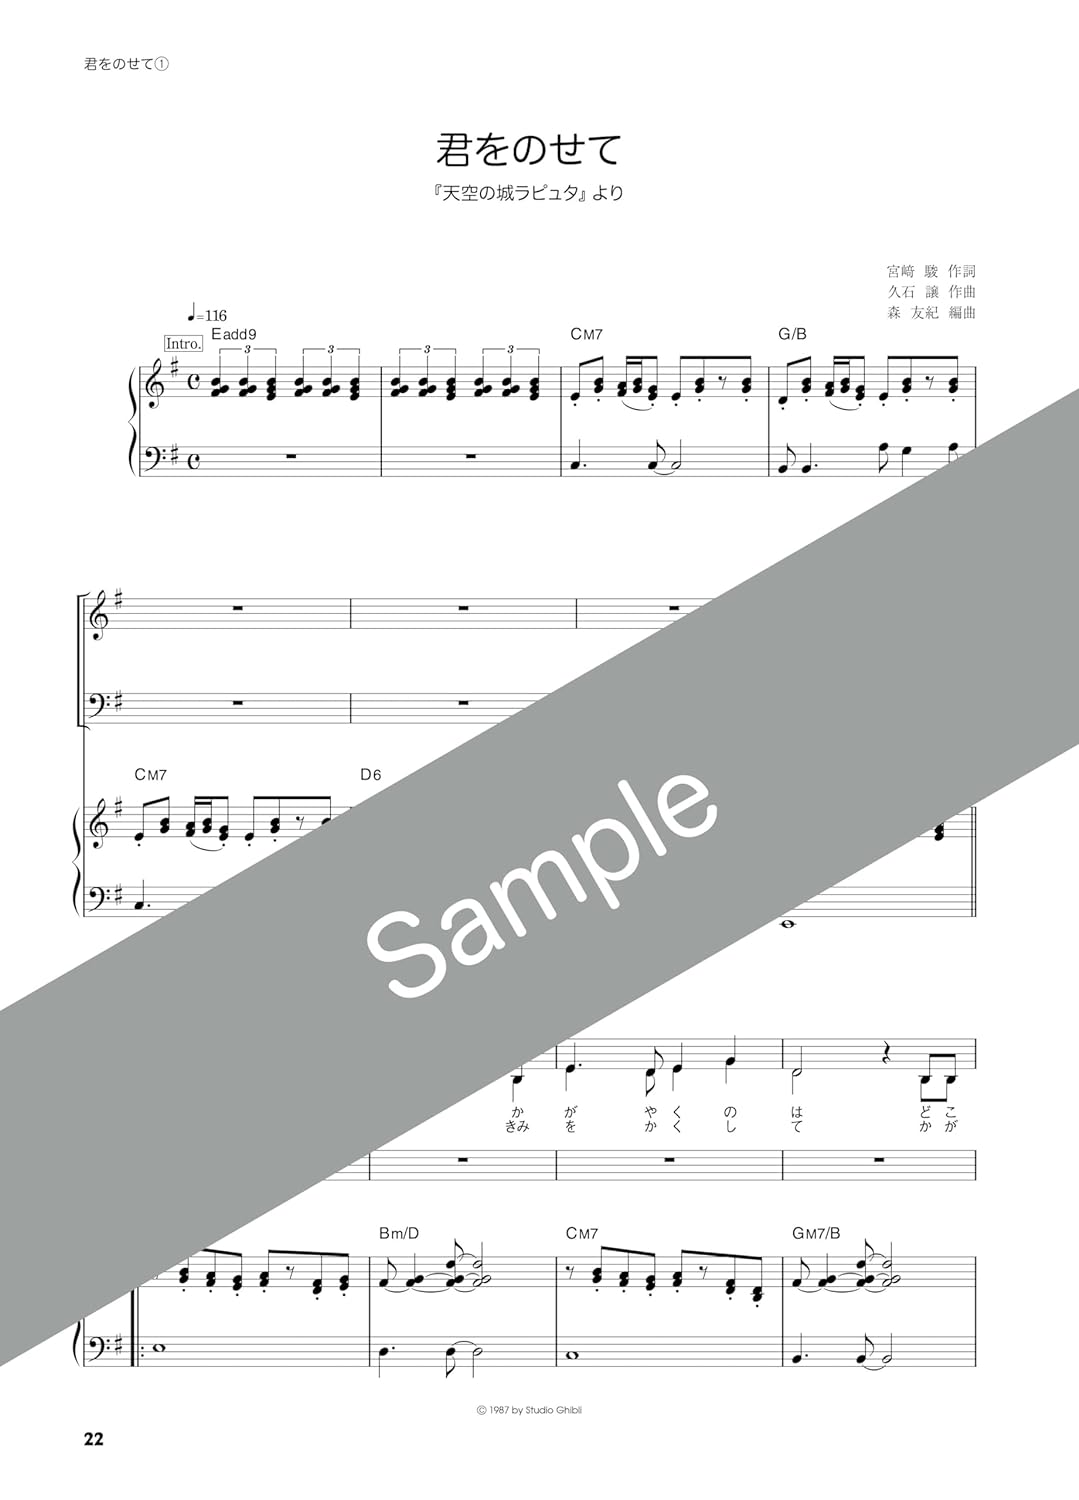 Studio Ghibli Chorus Album: with Piano accompaniment Sheet Music Book